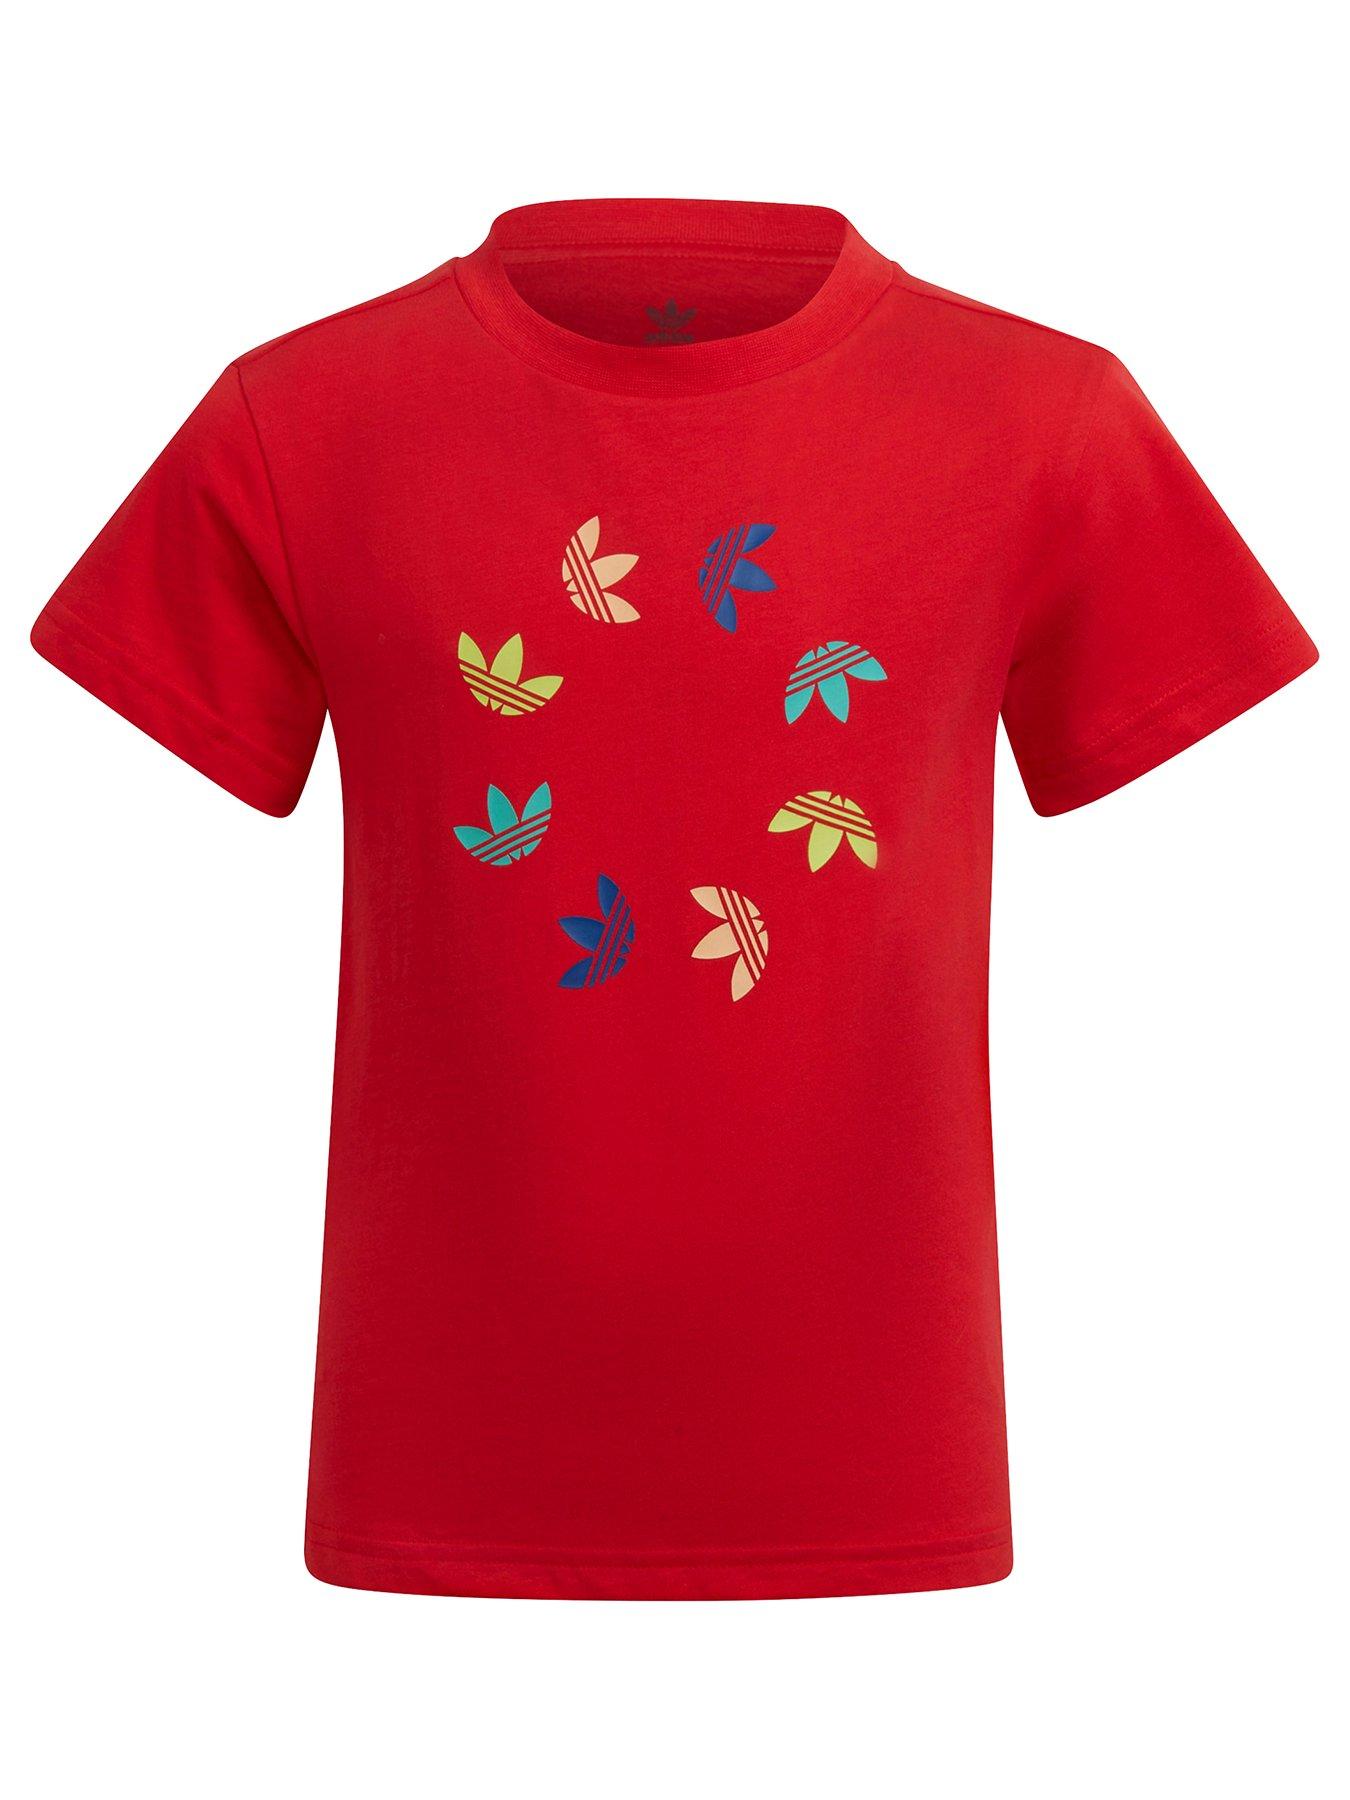 adidas Originals Kids Unisex Trefoil Graphic T-shirt, Red, Size 5-6 Years, Women